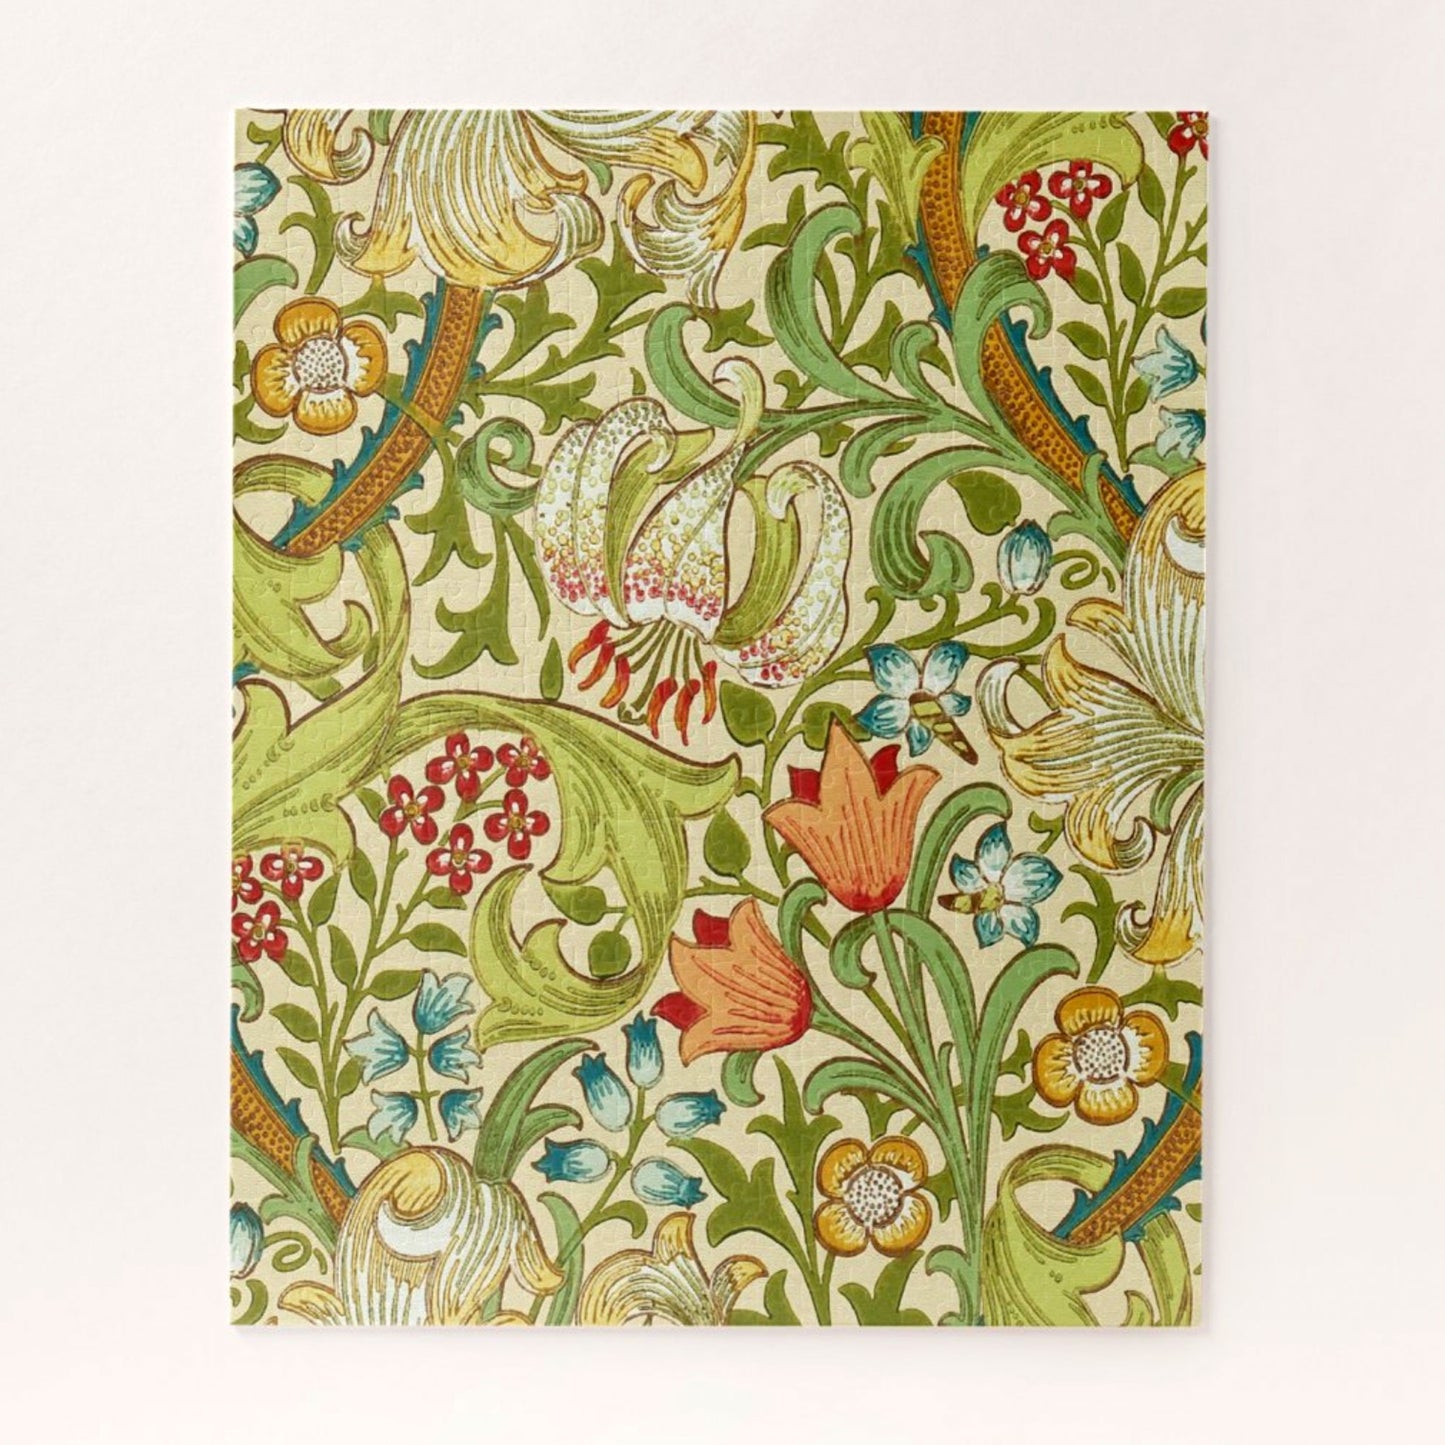 Golden Lilly William Morris Pre-Raphaelite Jigsaw Puzzle